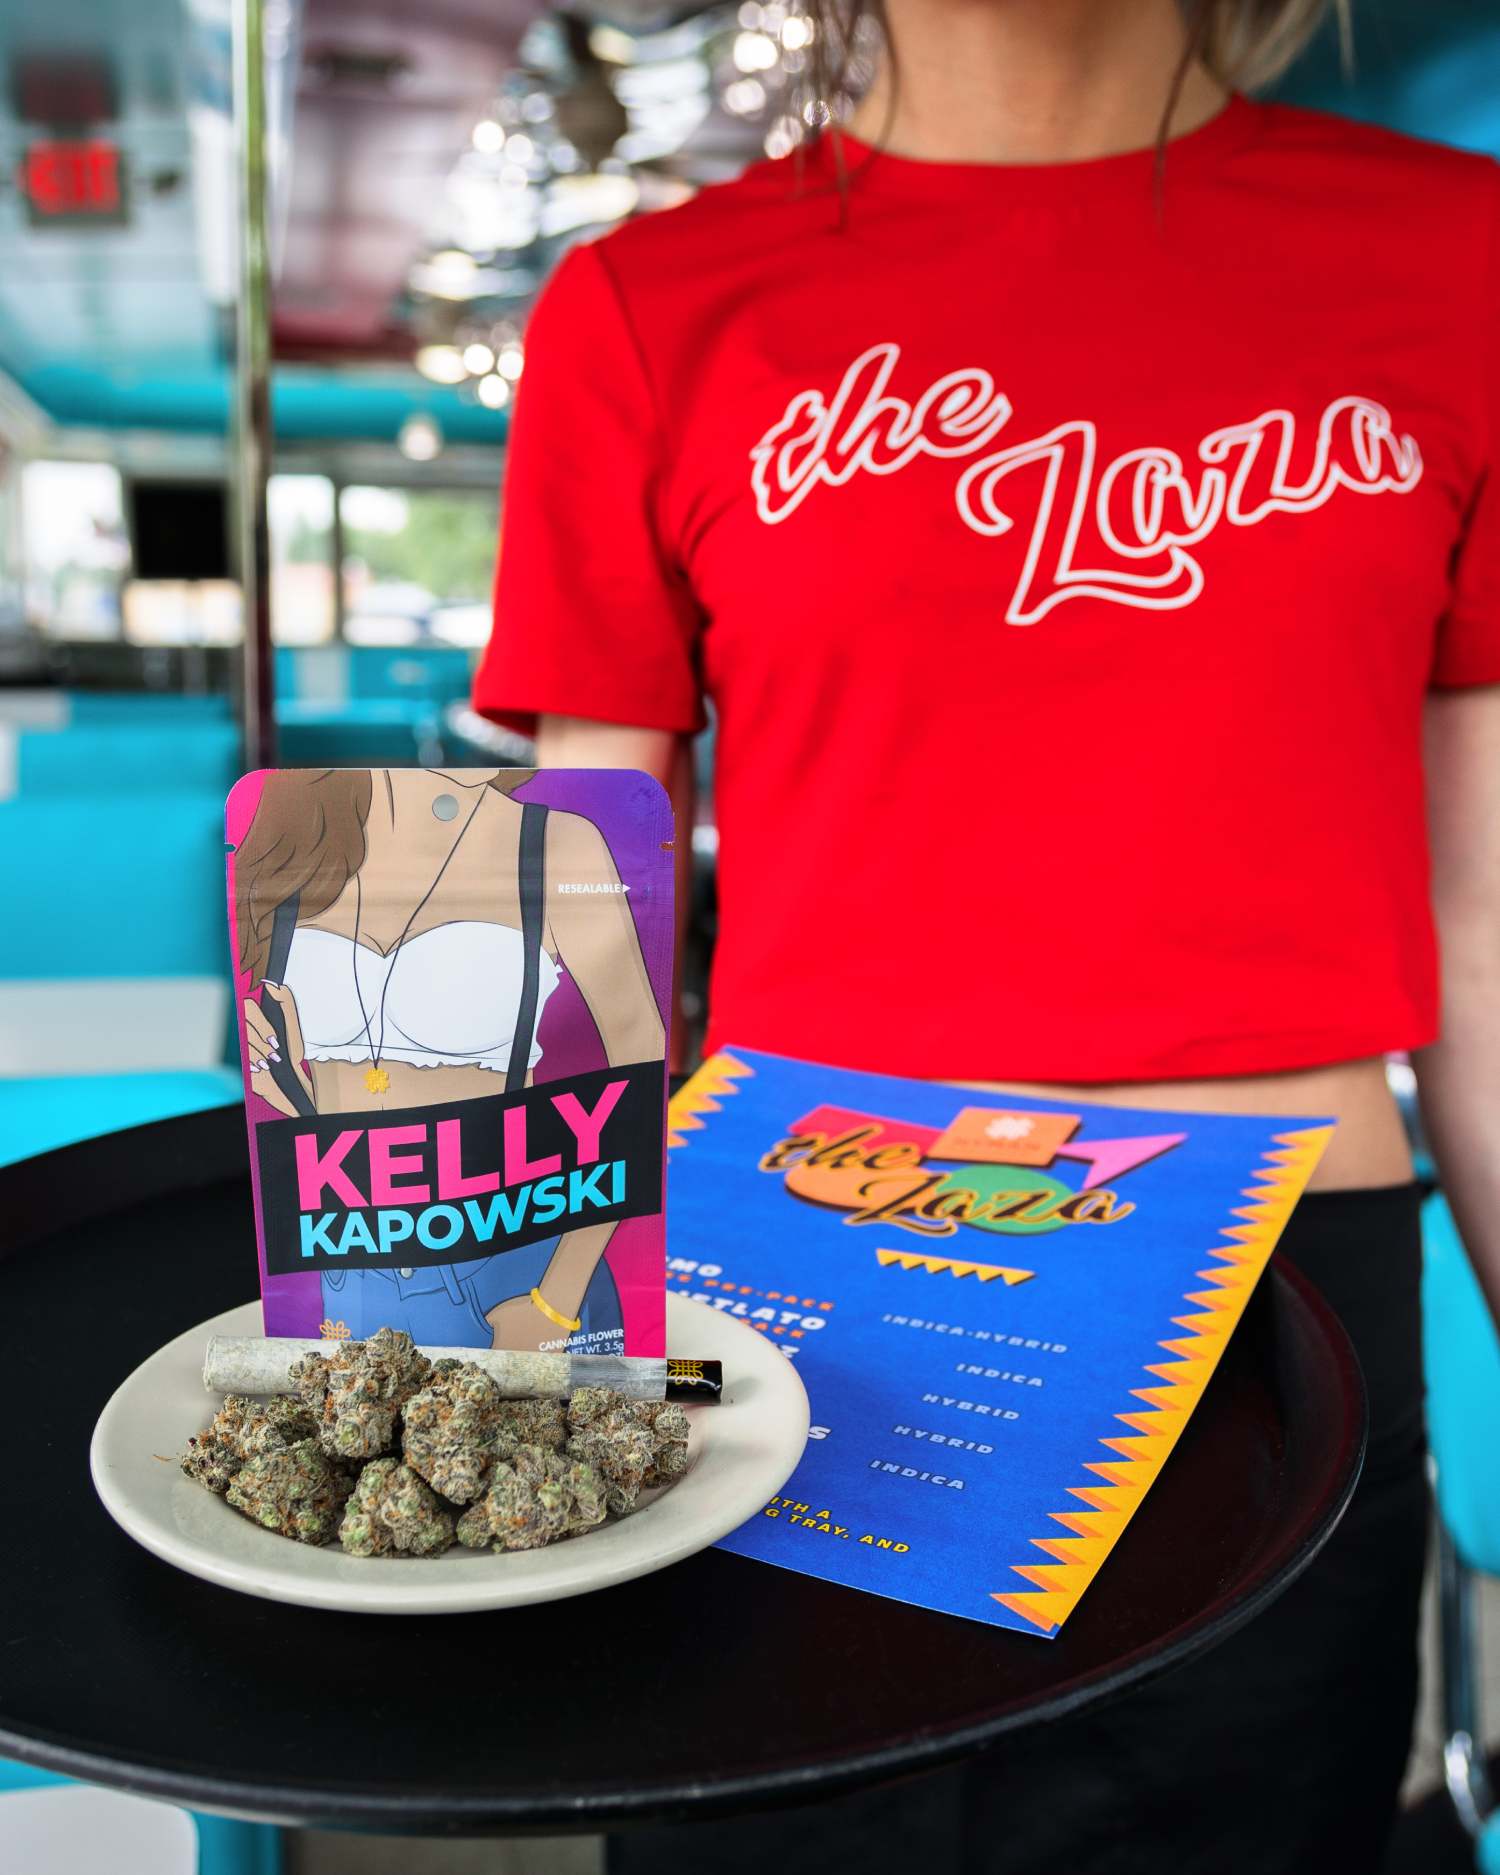 Kelly Kapowski, Weed Buds, Hyman Cannabis Strain